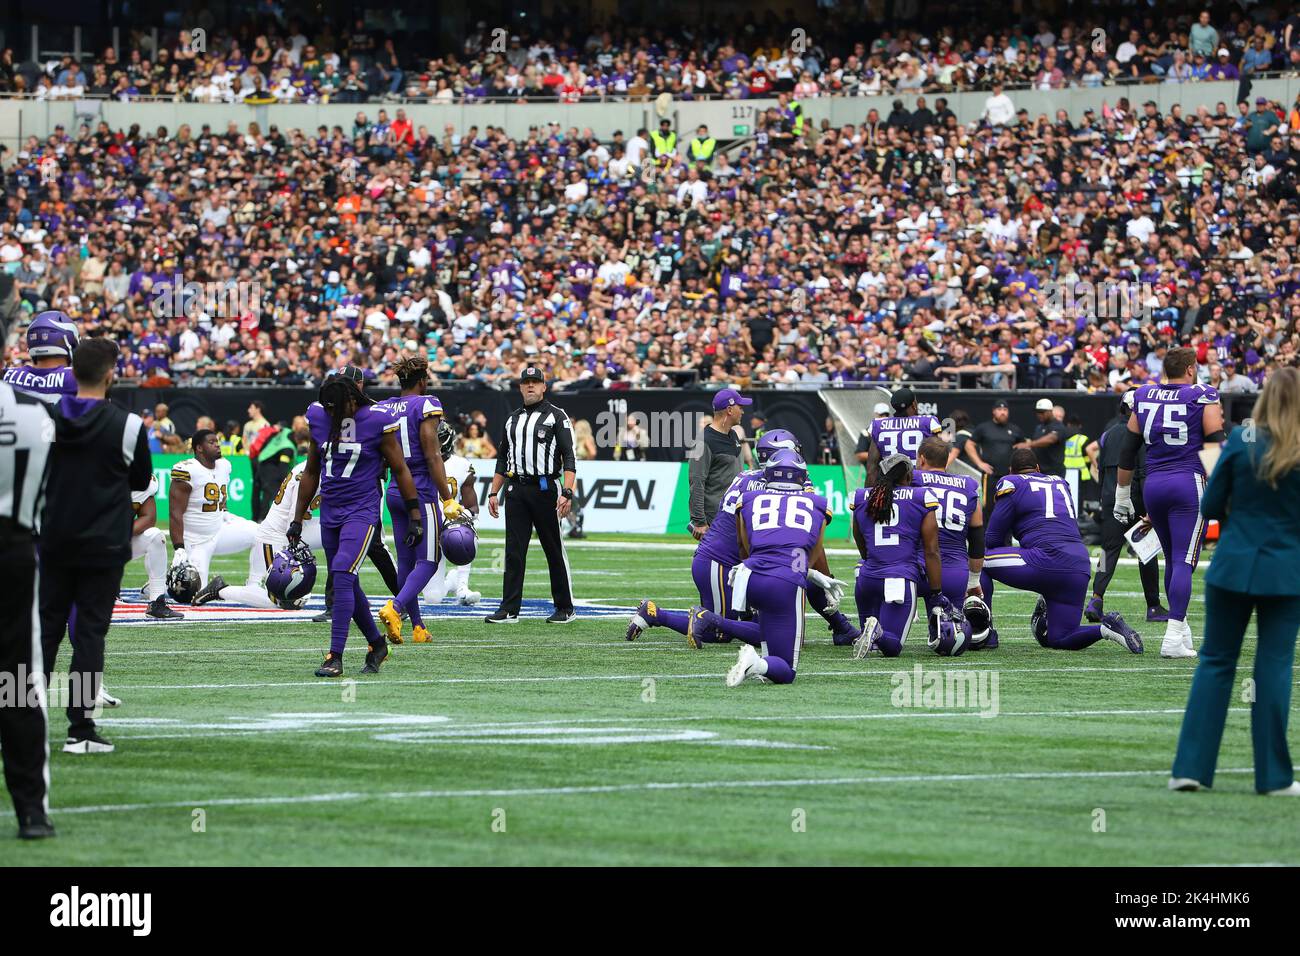 NFL London LIVE: Minnesota Vikings take on the New Orleans Saints